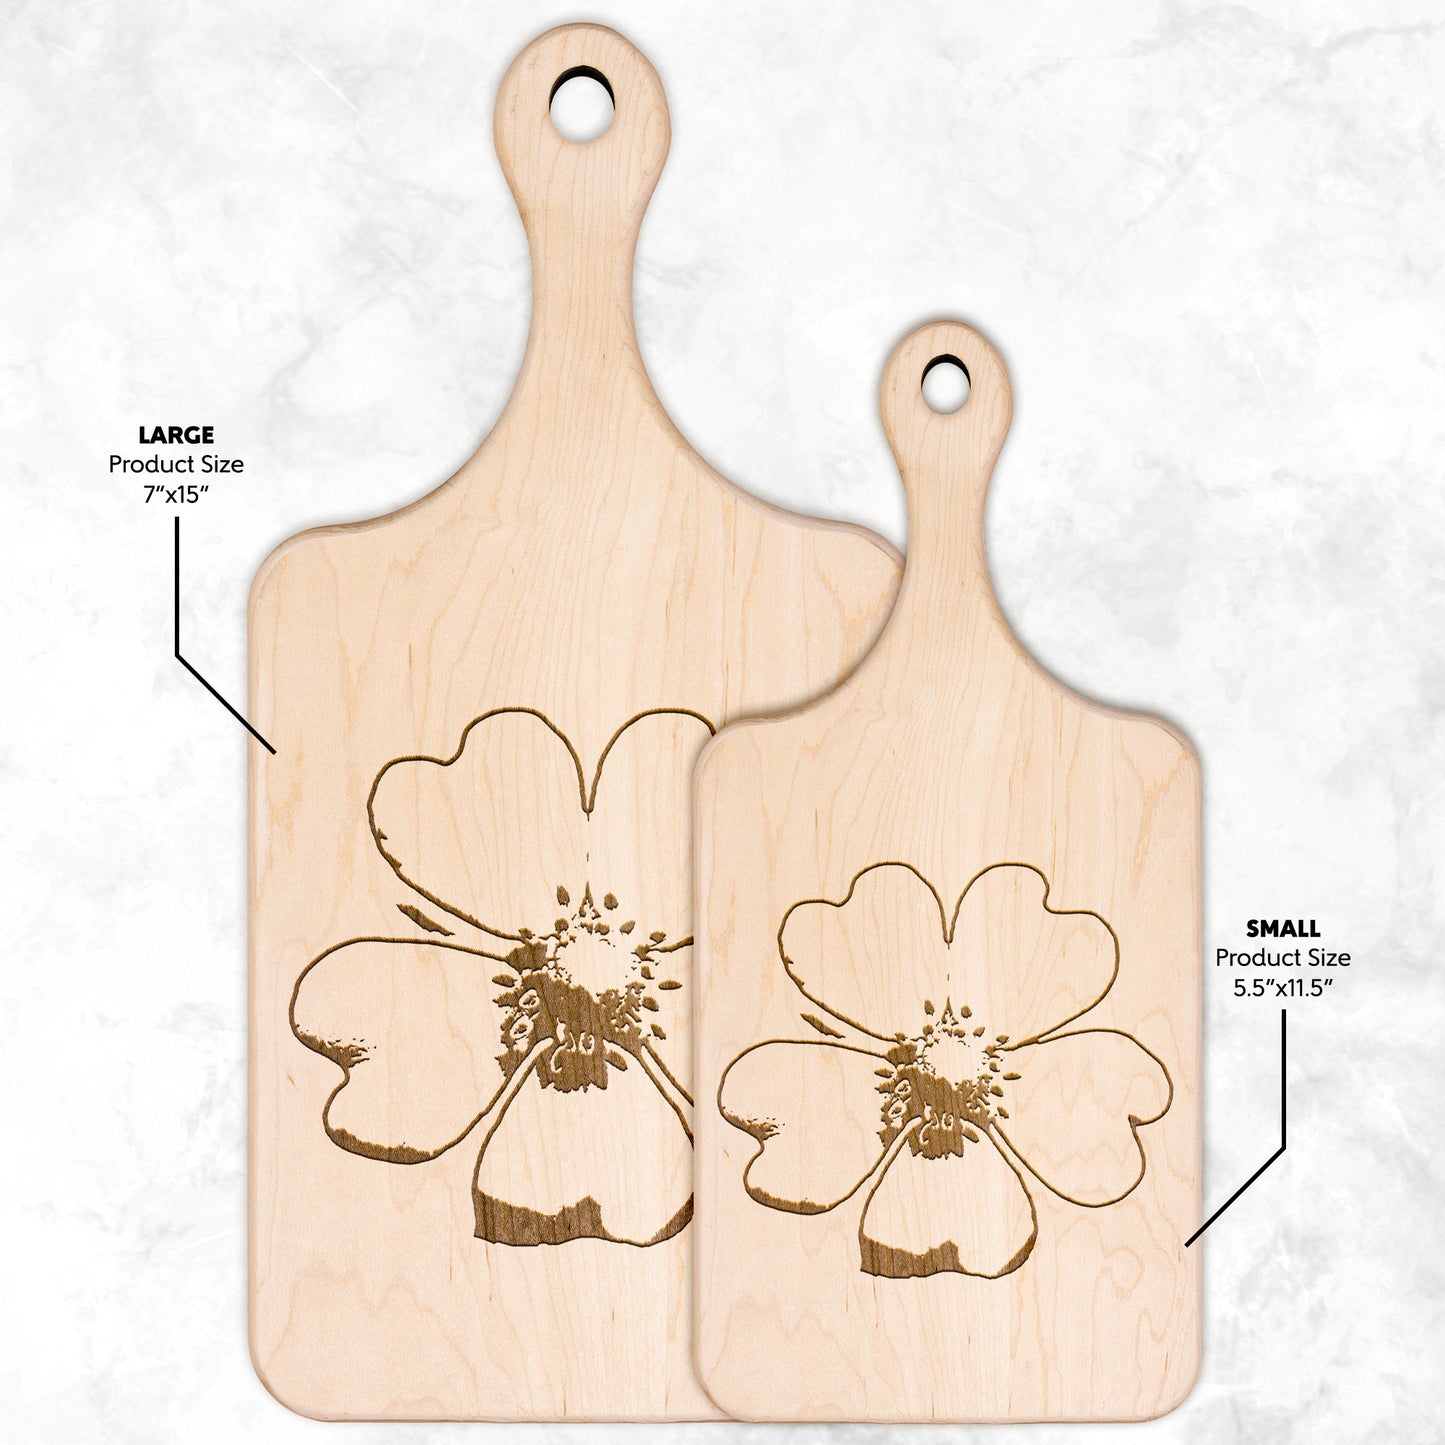 Wildflower Paddle Hardwood Cutting Board